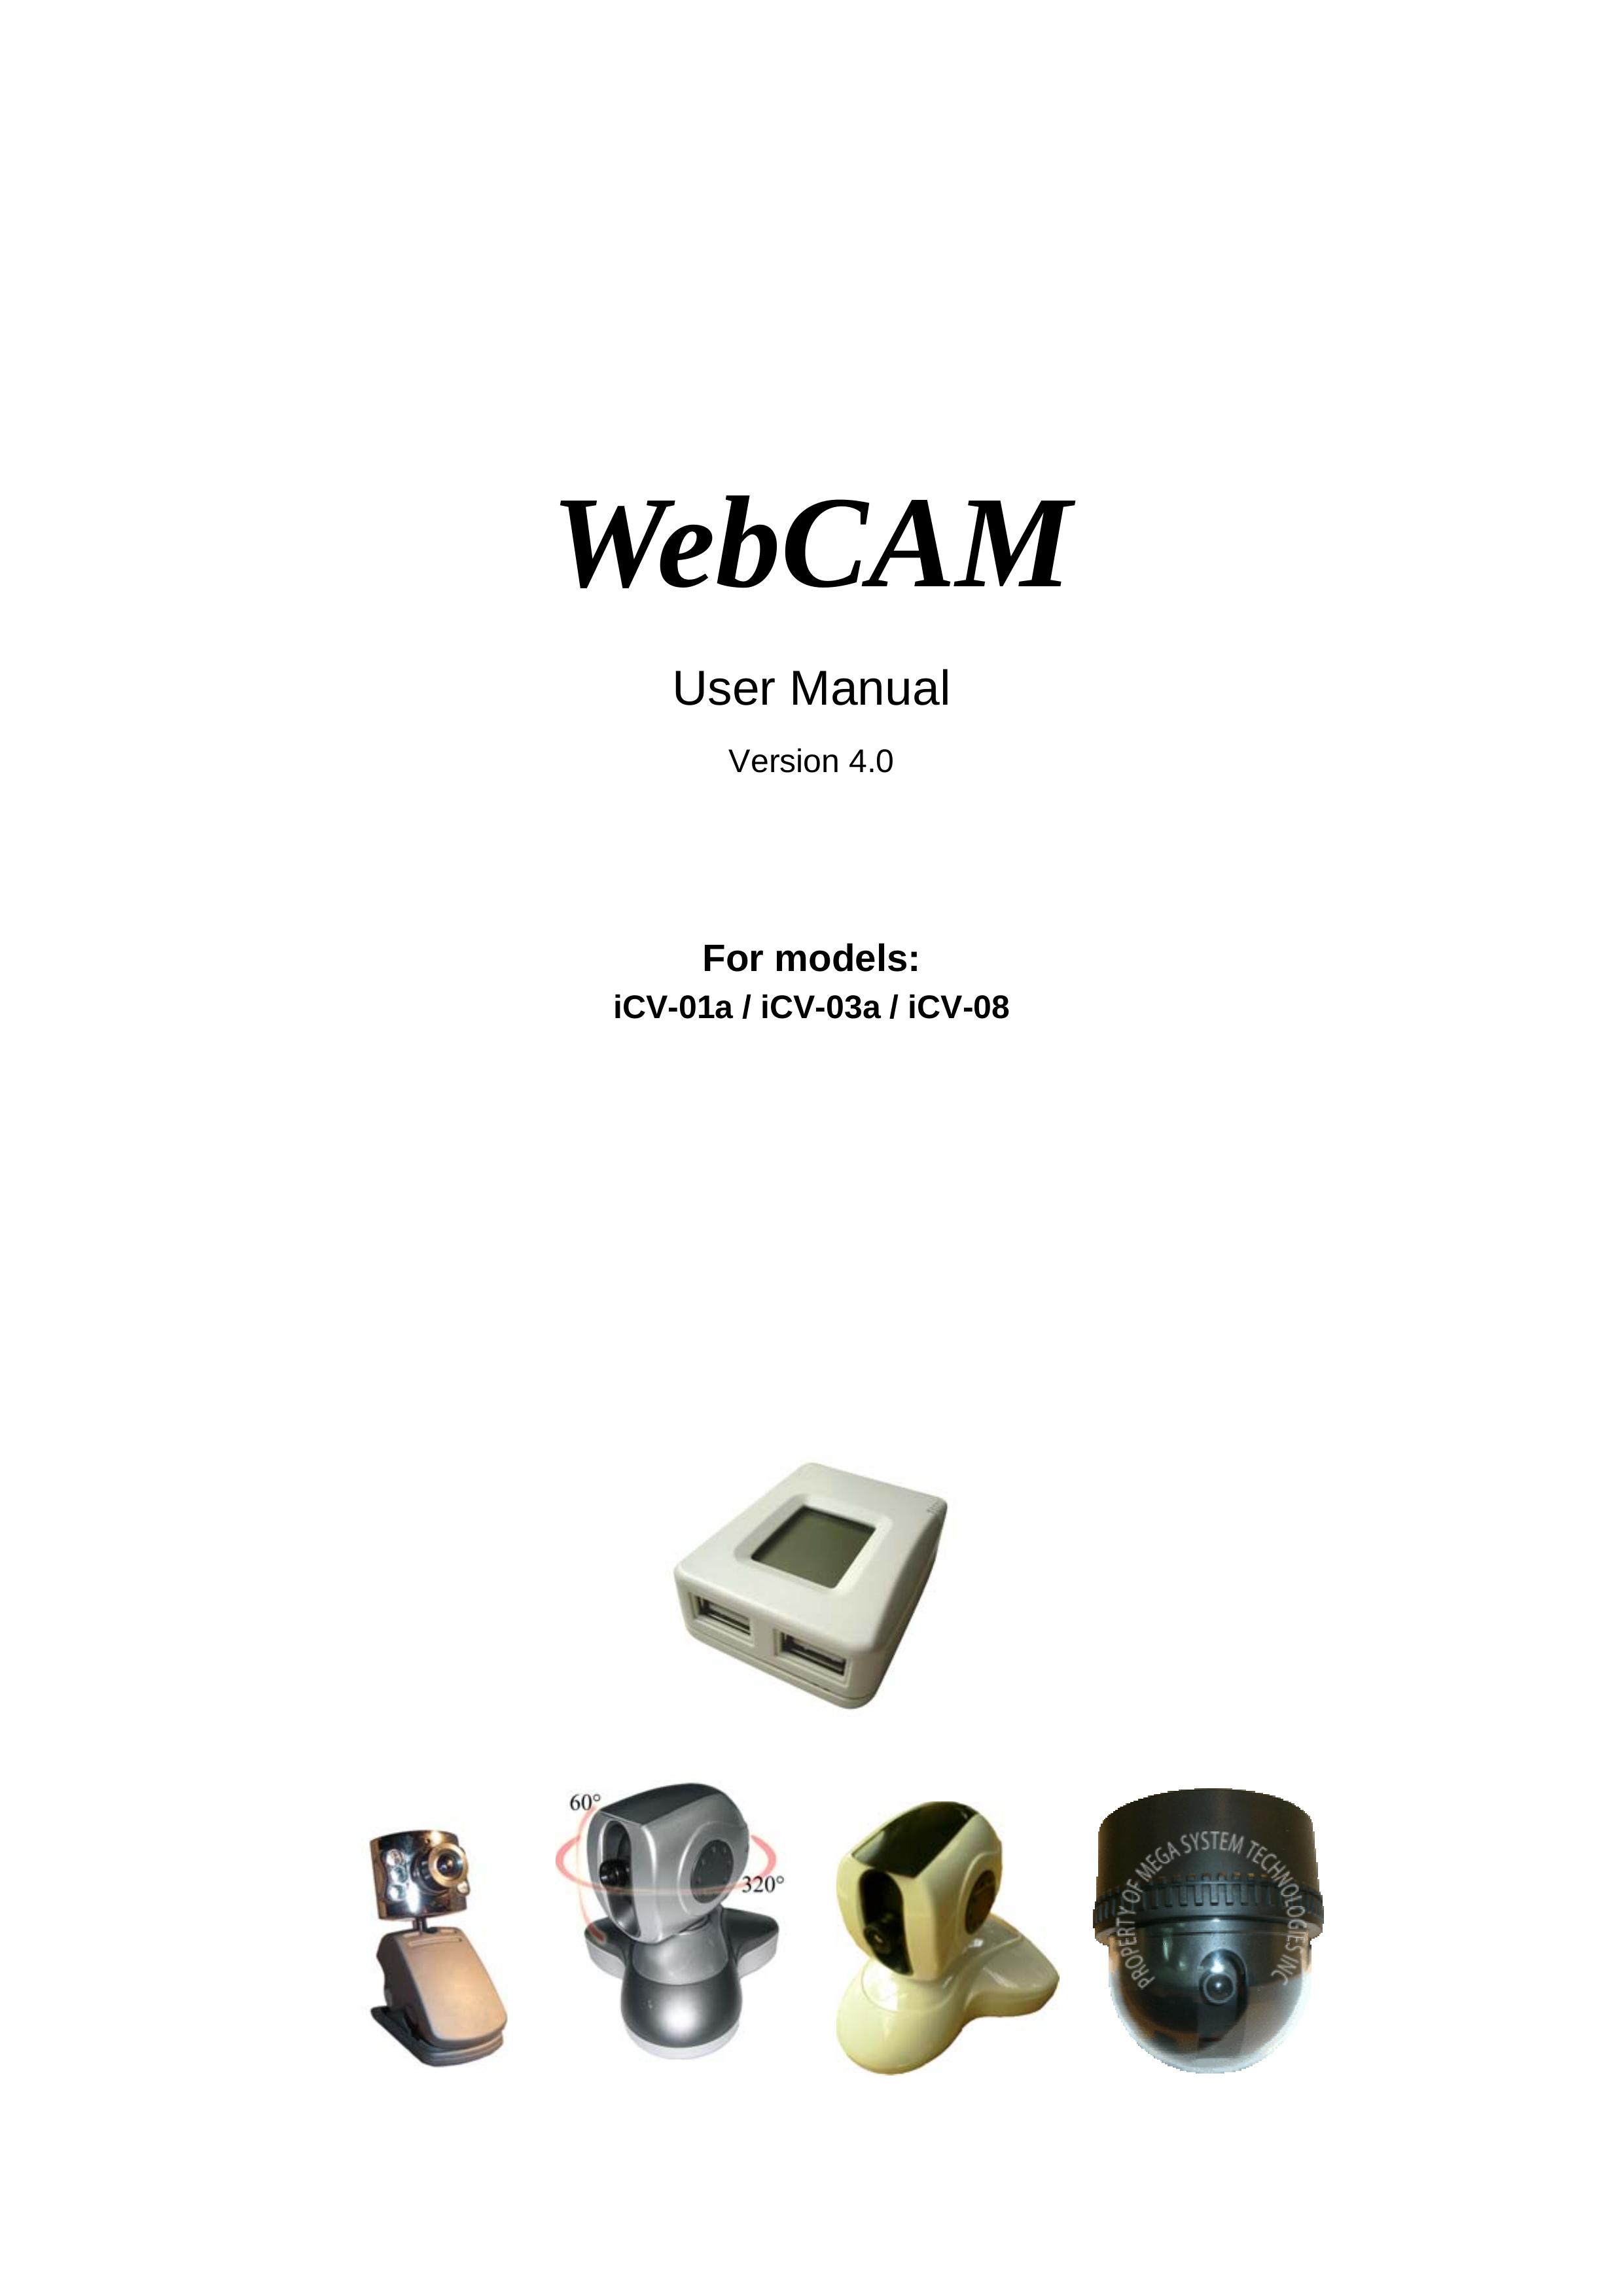 3Com iCV-03a Digital Camera User Manual